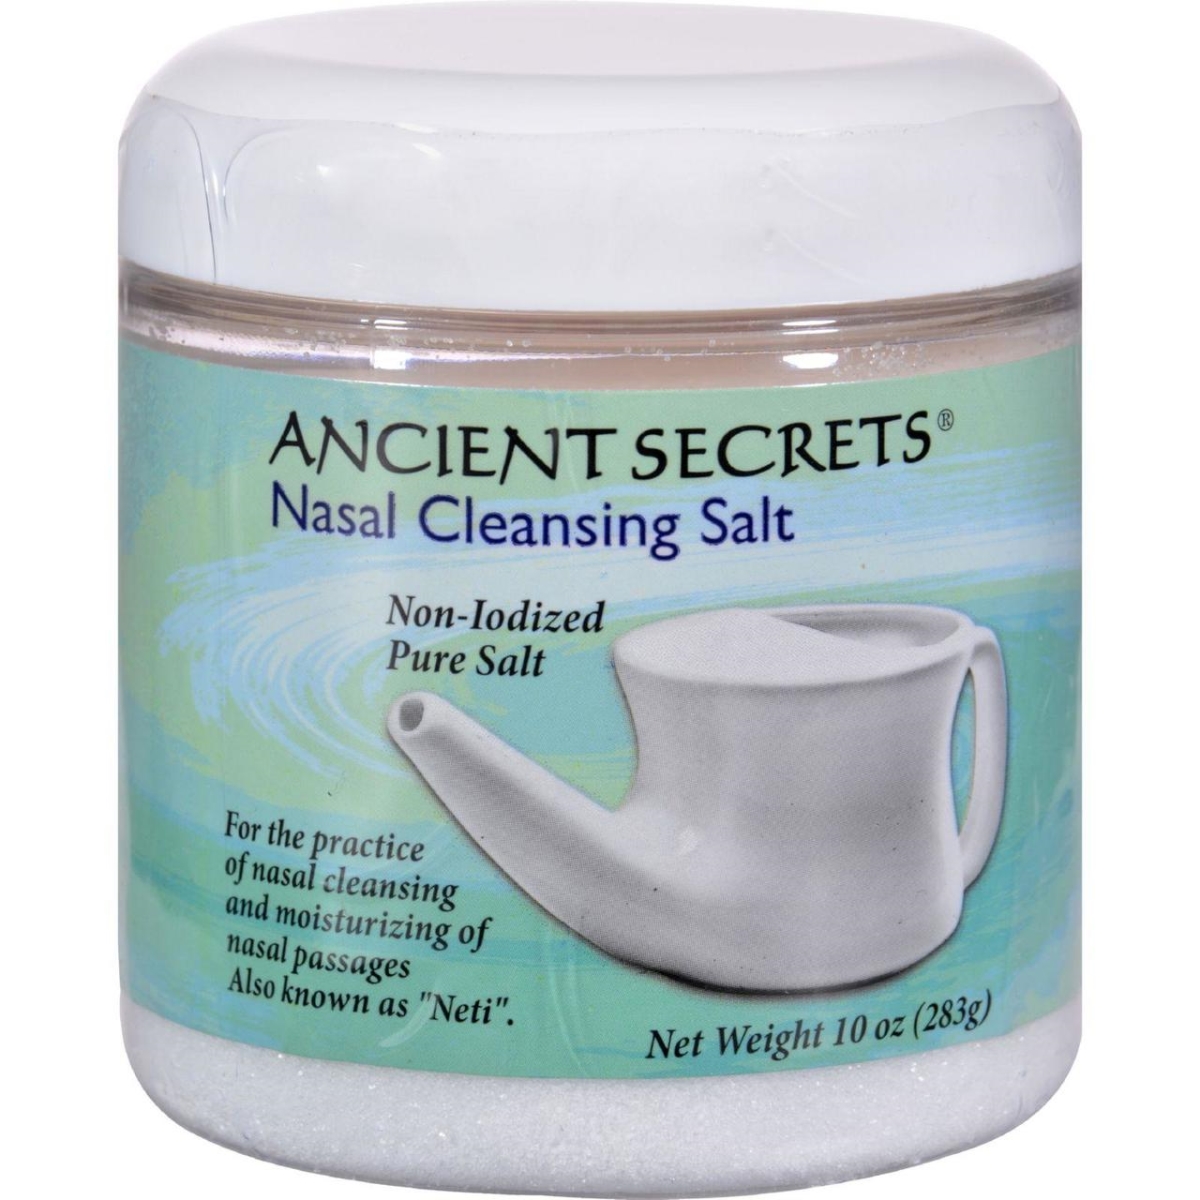 Hg0499848 10 Oz Nasal Cleansing Salt